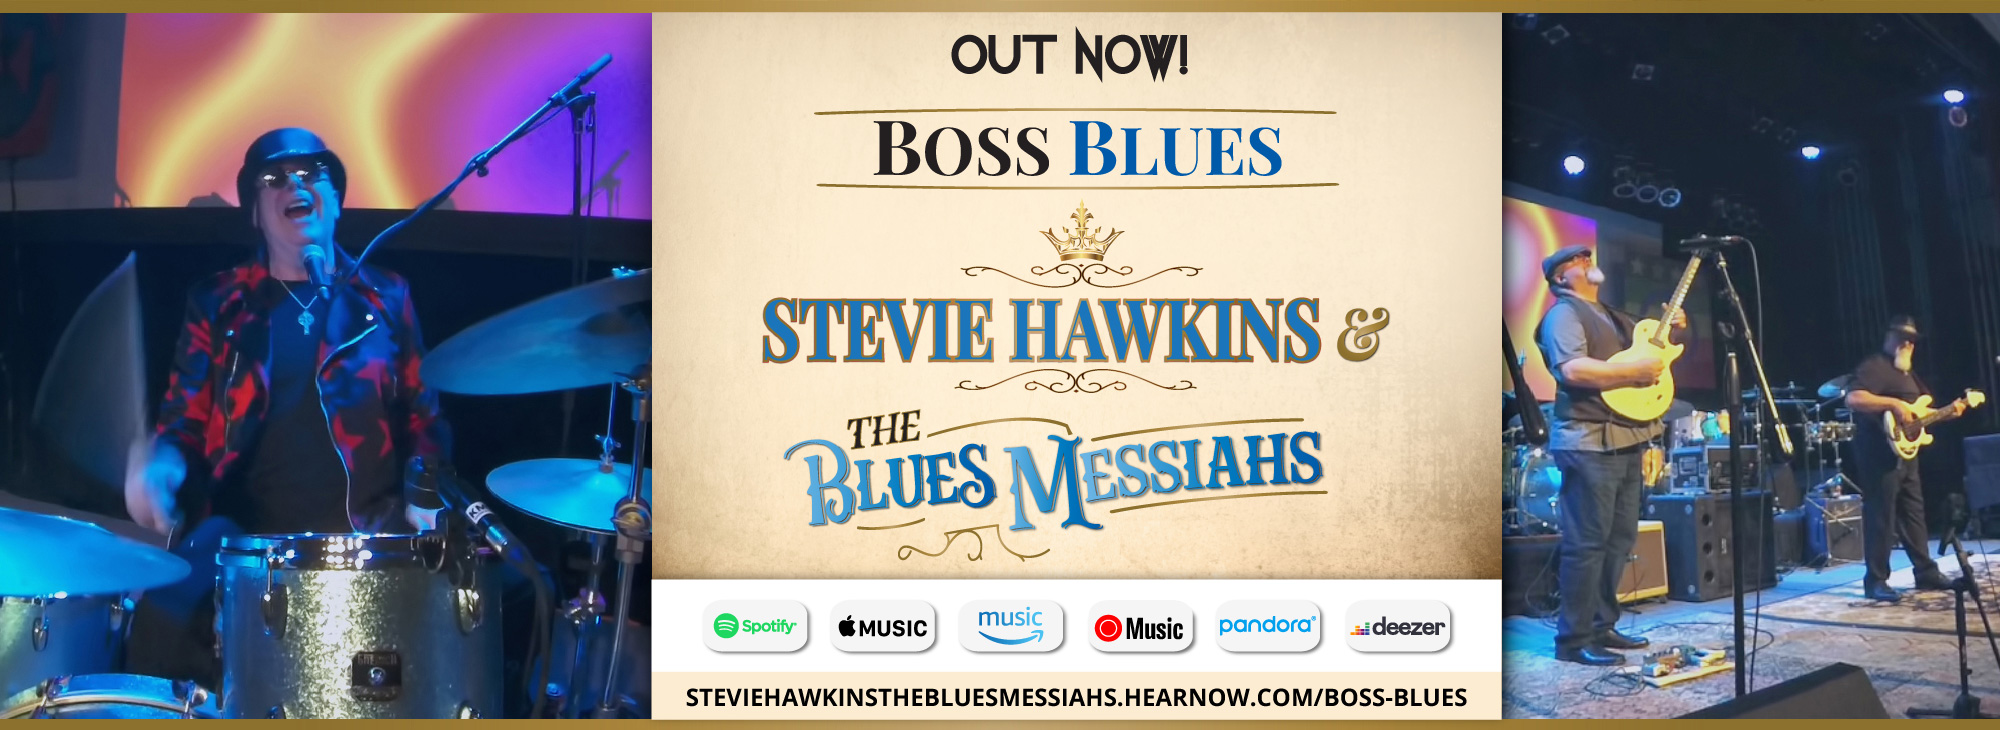 Boss Blues by Stevie Hawkins & The Blues Messiahs